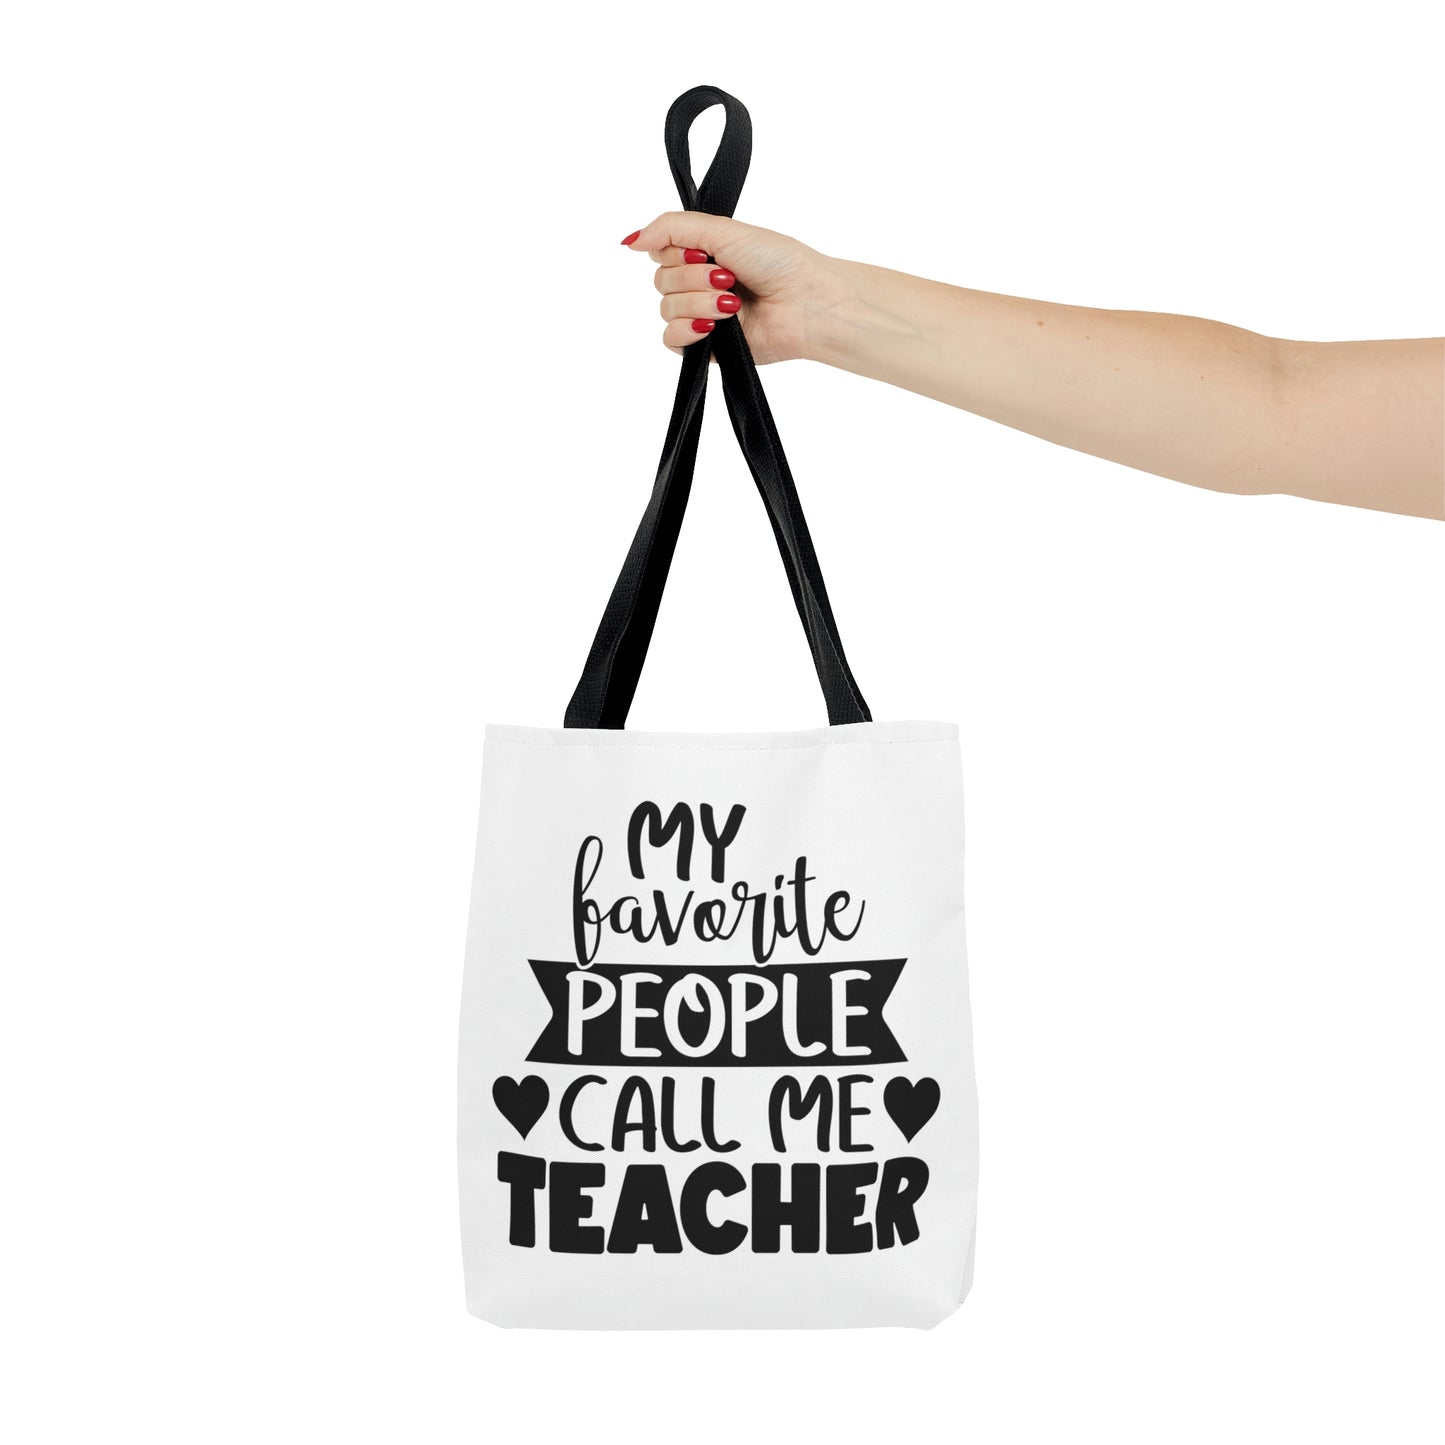 "My favorite people call me teacher"  Tote Bag